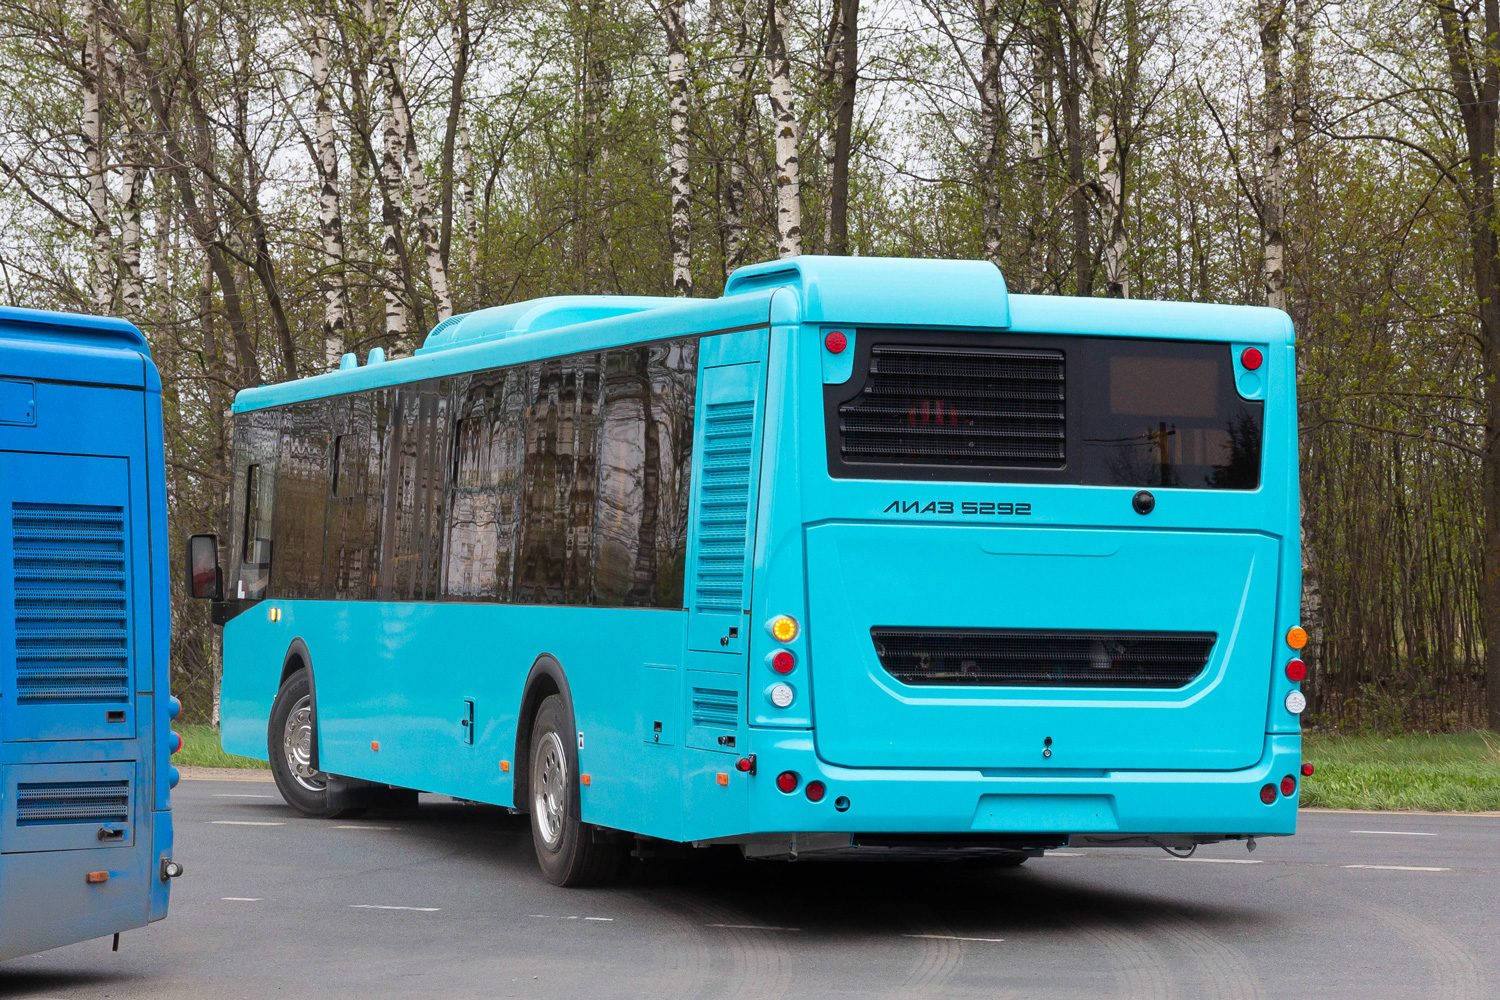 Petrohrad — New buses